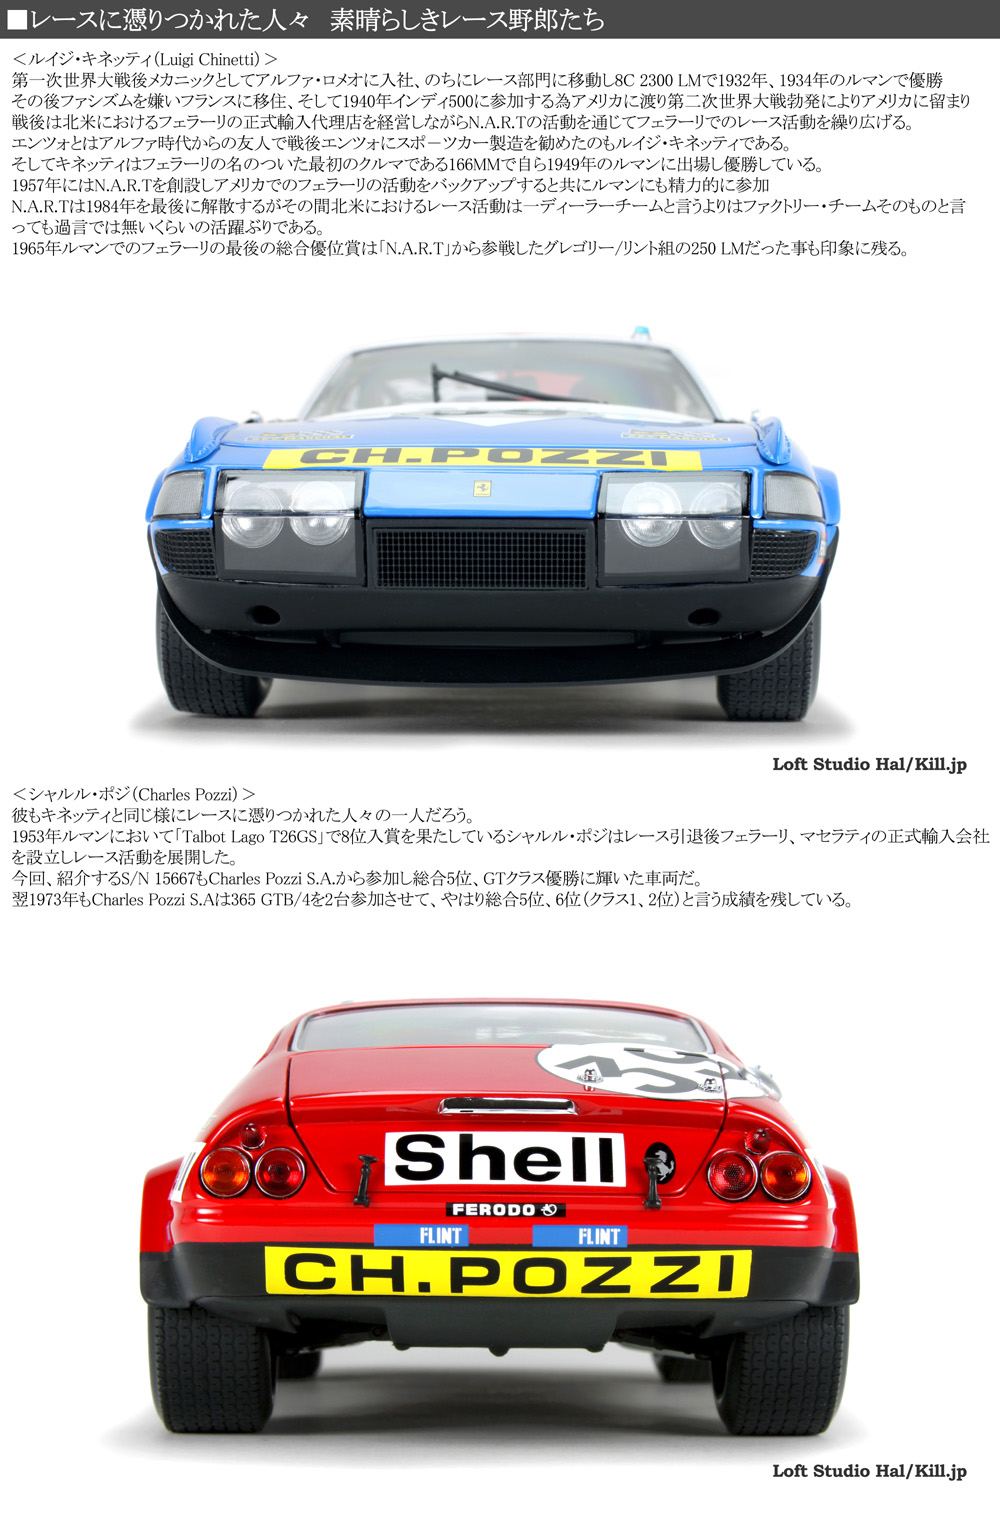 Ferrari 365 GTB/4 Competition kyosho 1/18